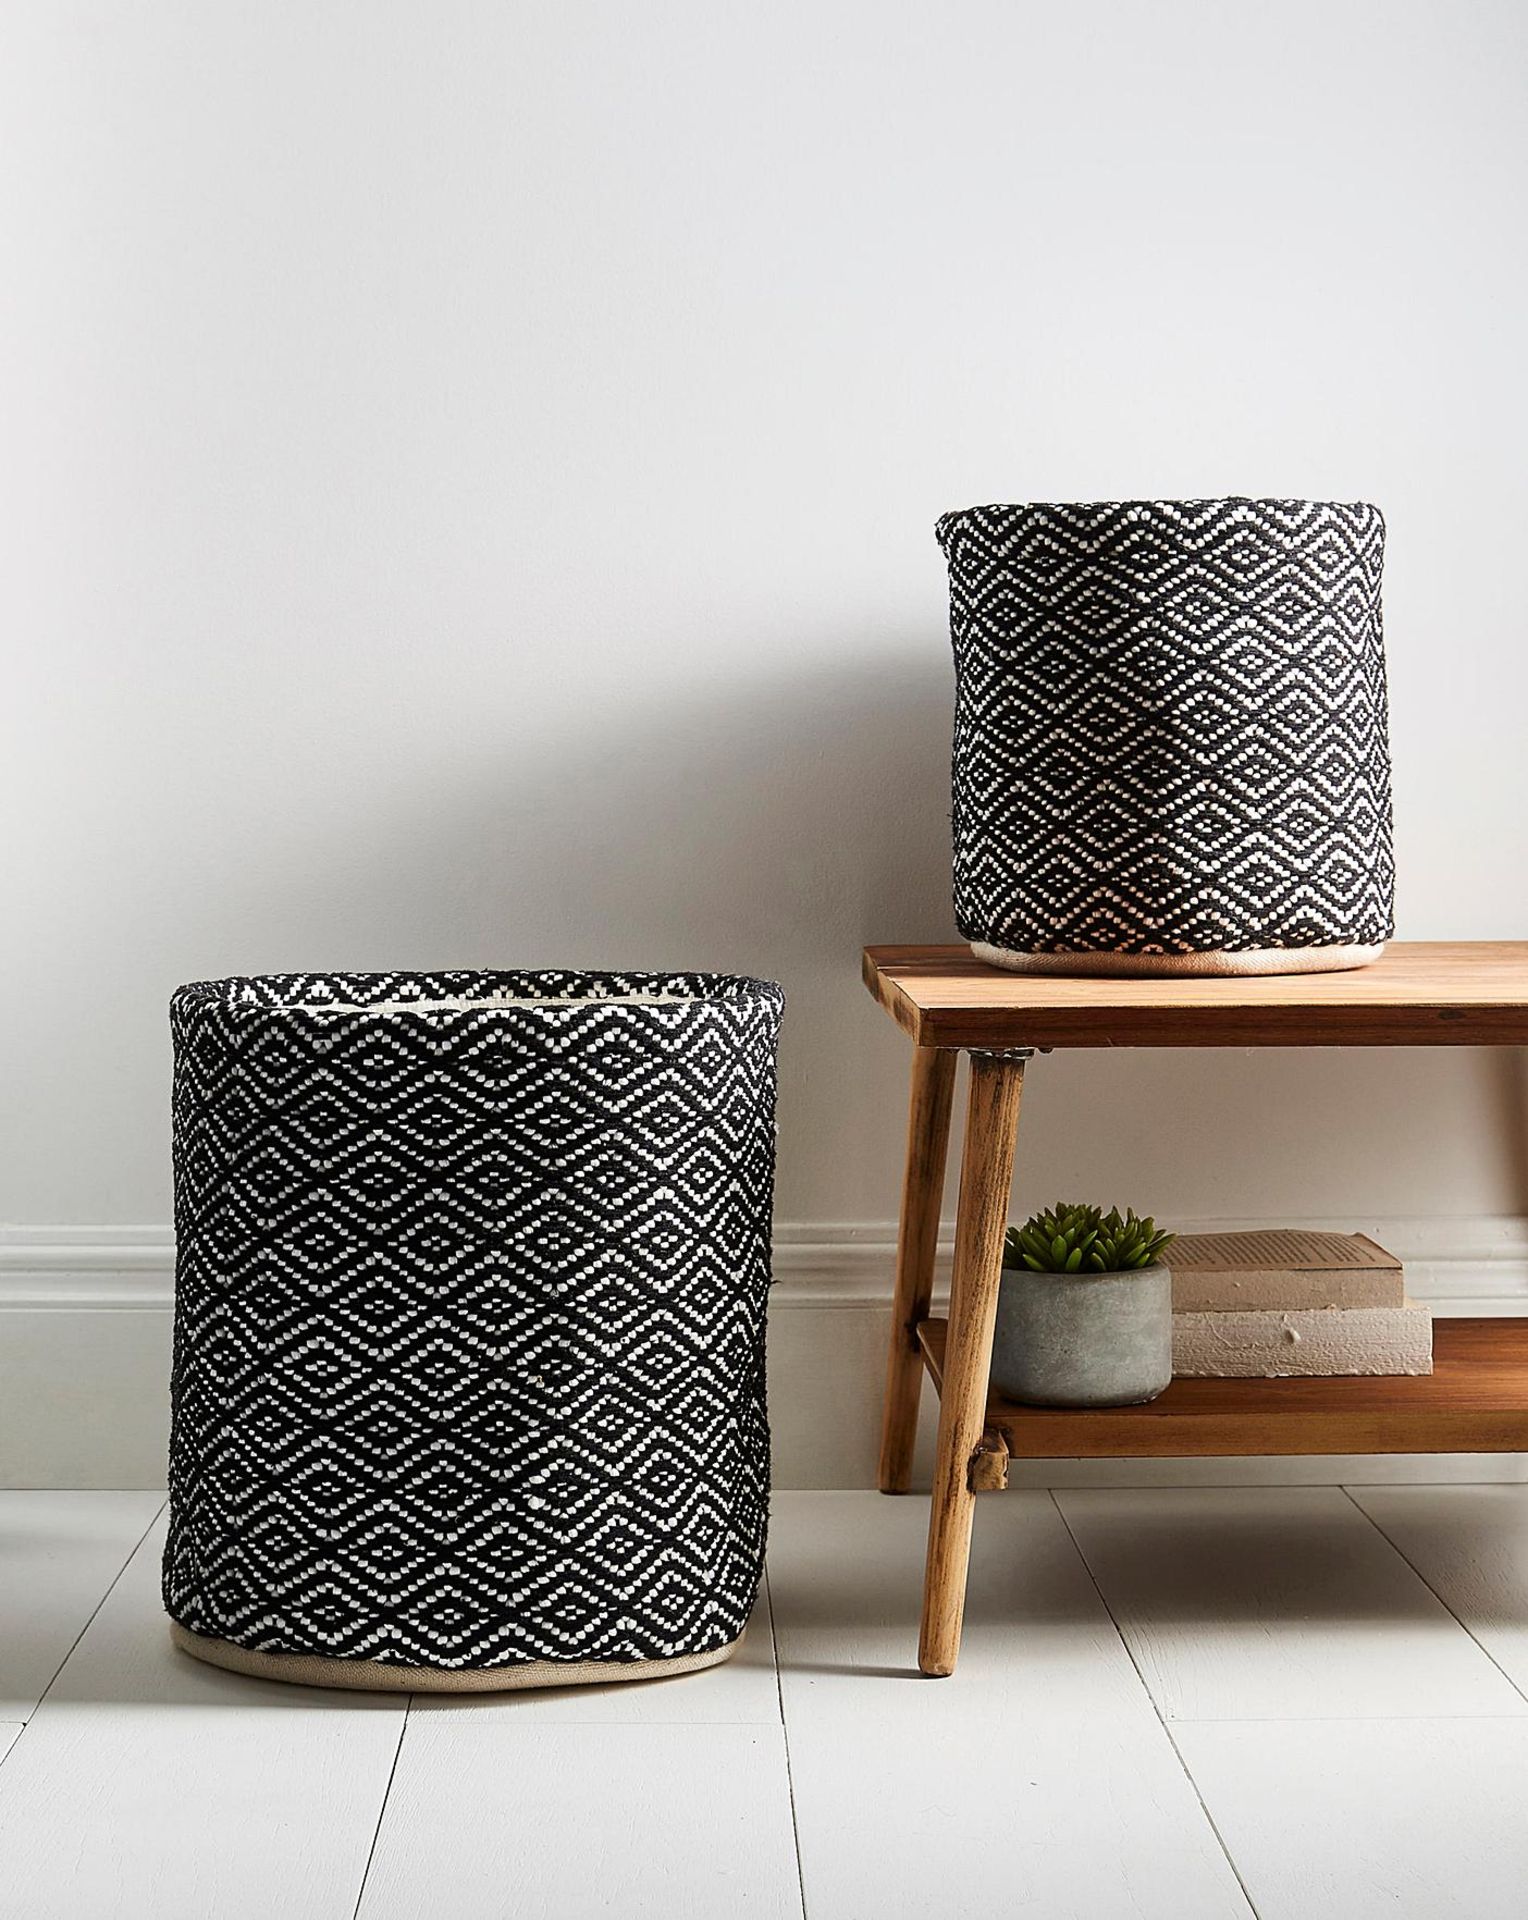 6x BRAND NEW Set of 2 Monochrome Woven Baskets. RRP £40 EACH.These lovely monochrome woven baskets